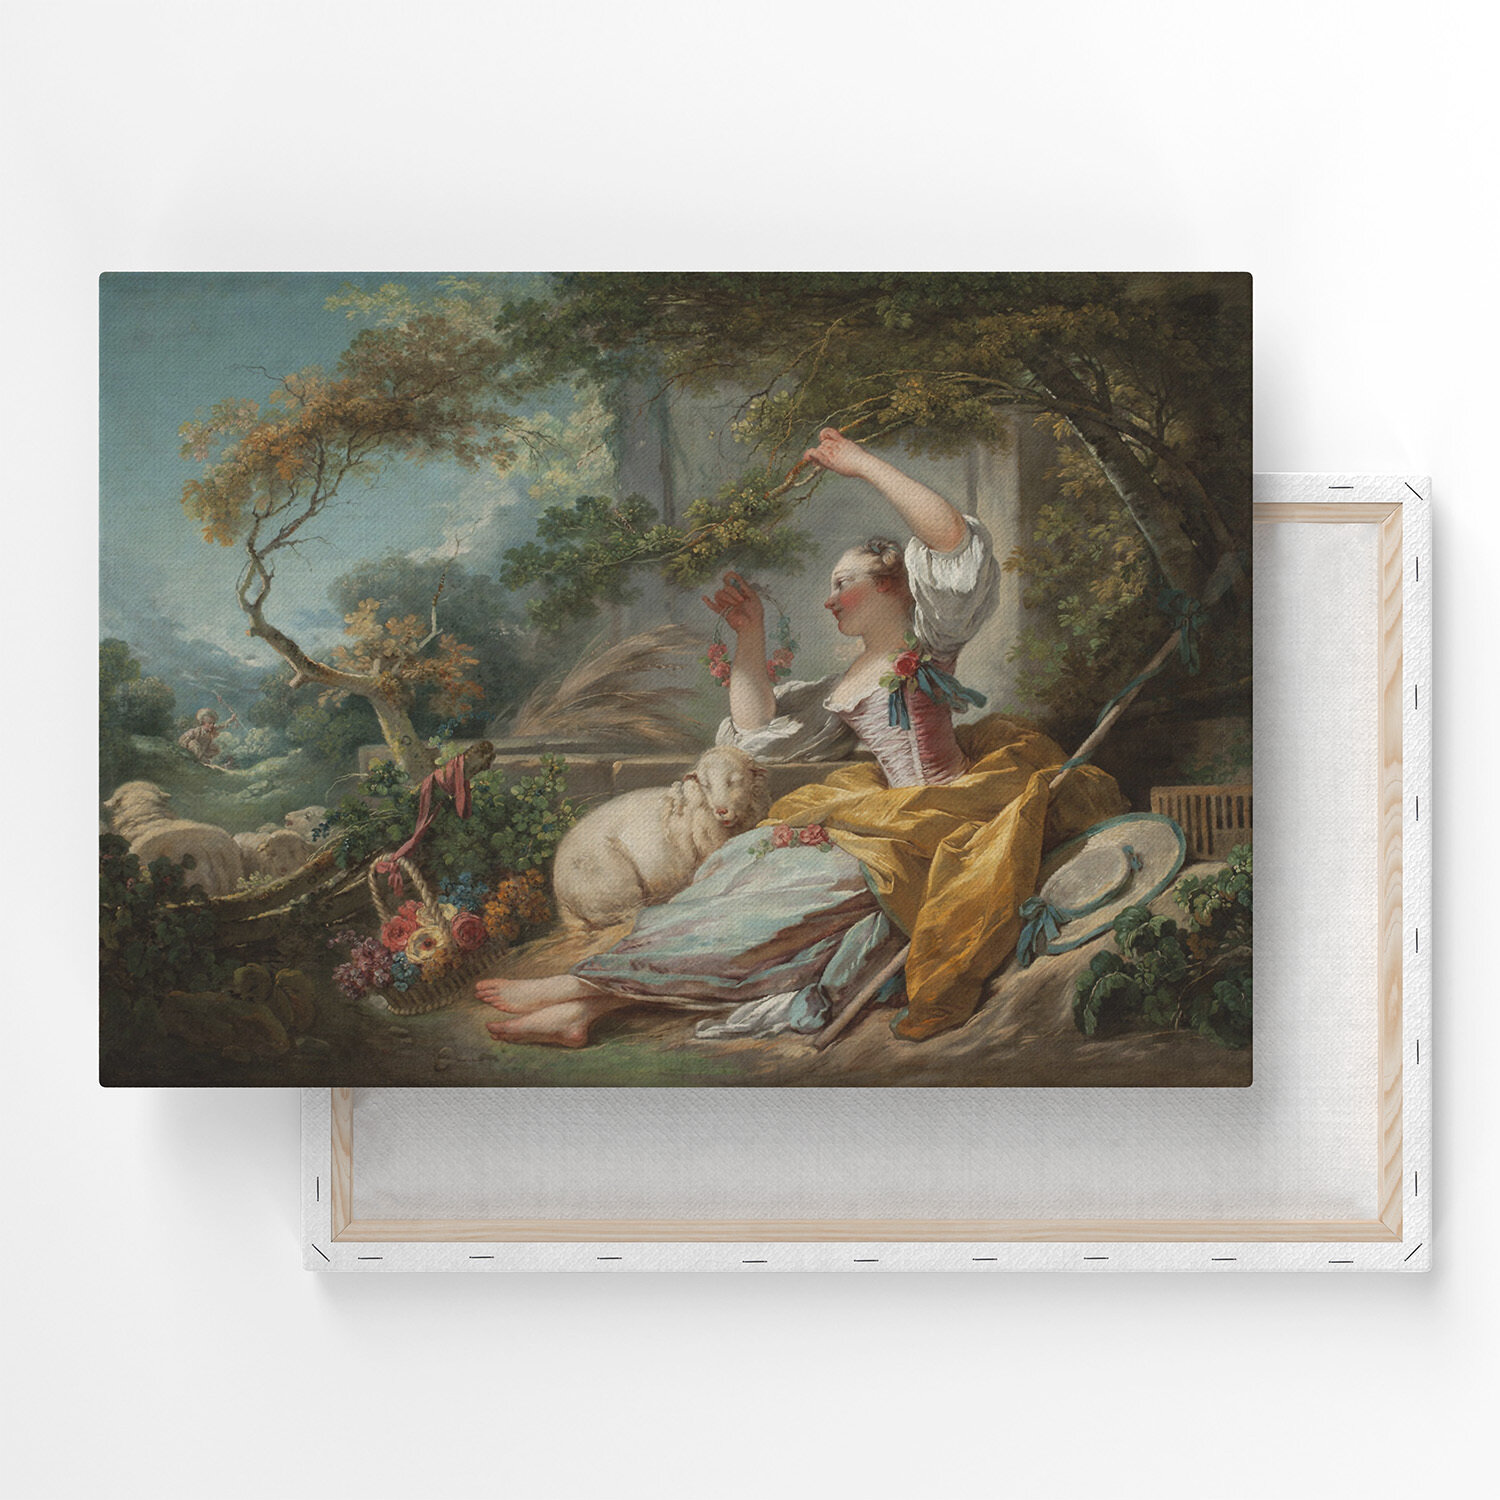 Картина на холсте, репродукция / The Shepherdess / Жан-Оноре Фрагонар / Размер 30 x 40 см